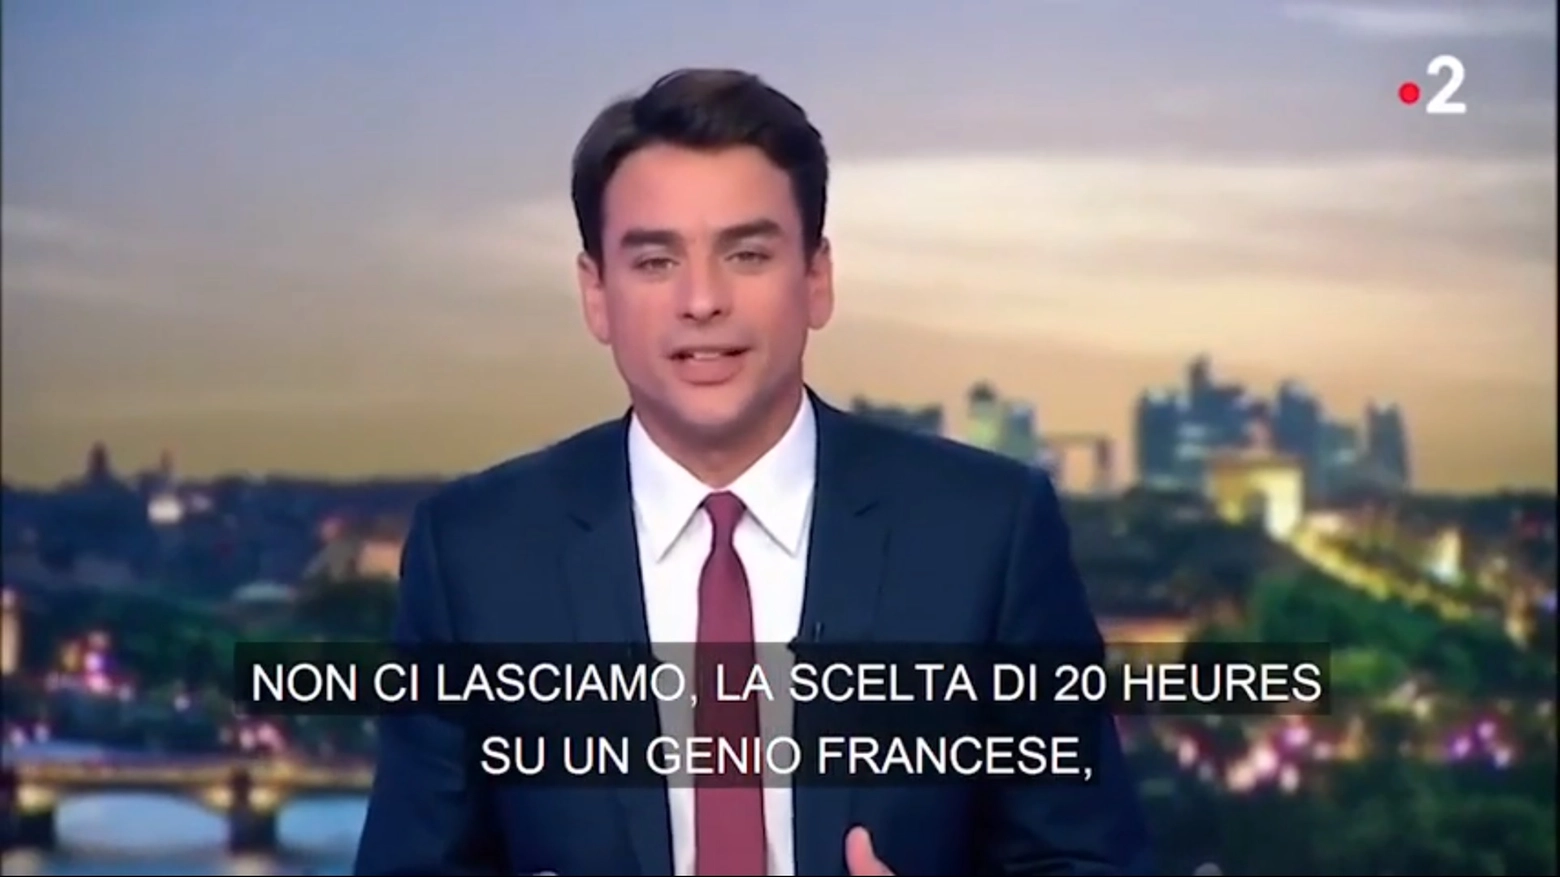 France 2, la gaffe su Leonardo "francese"